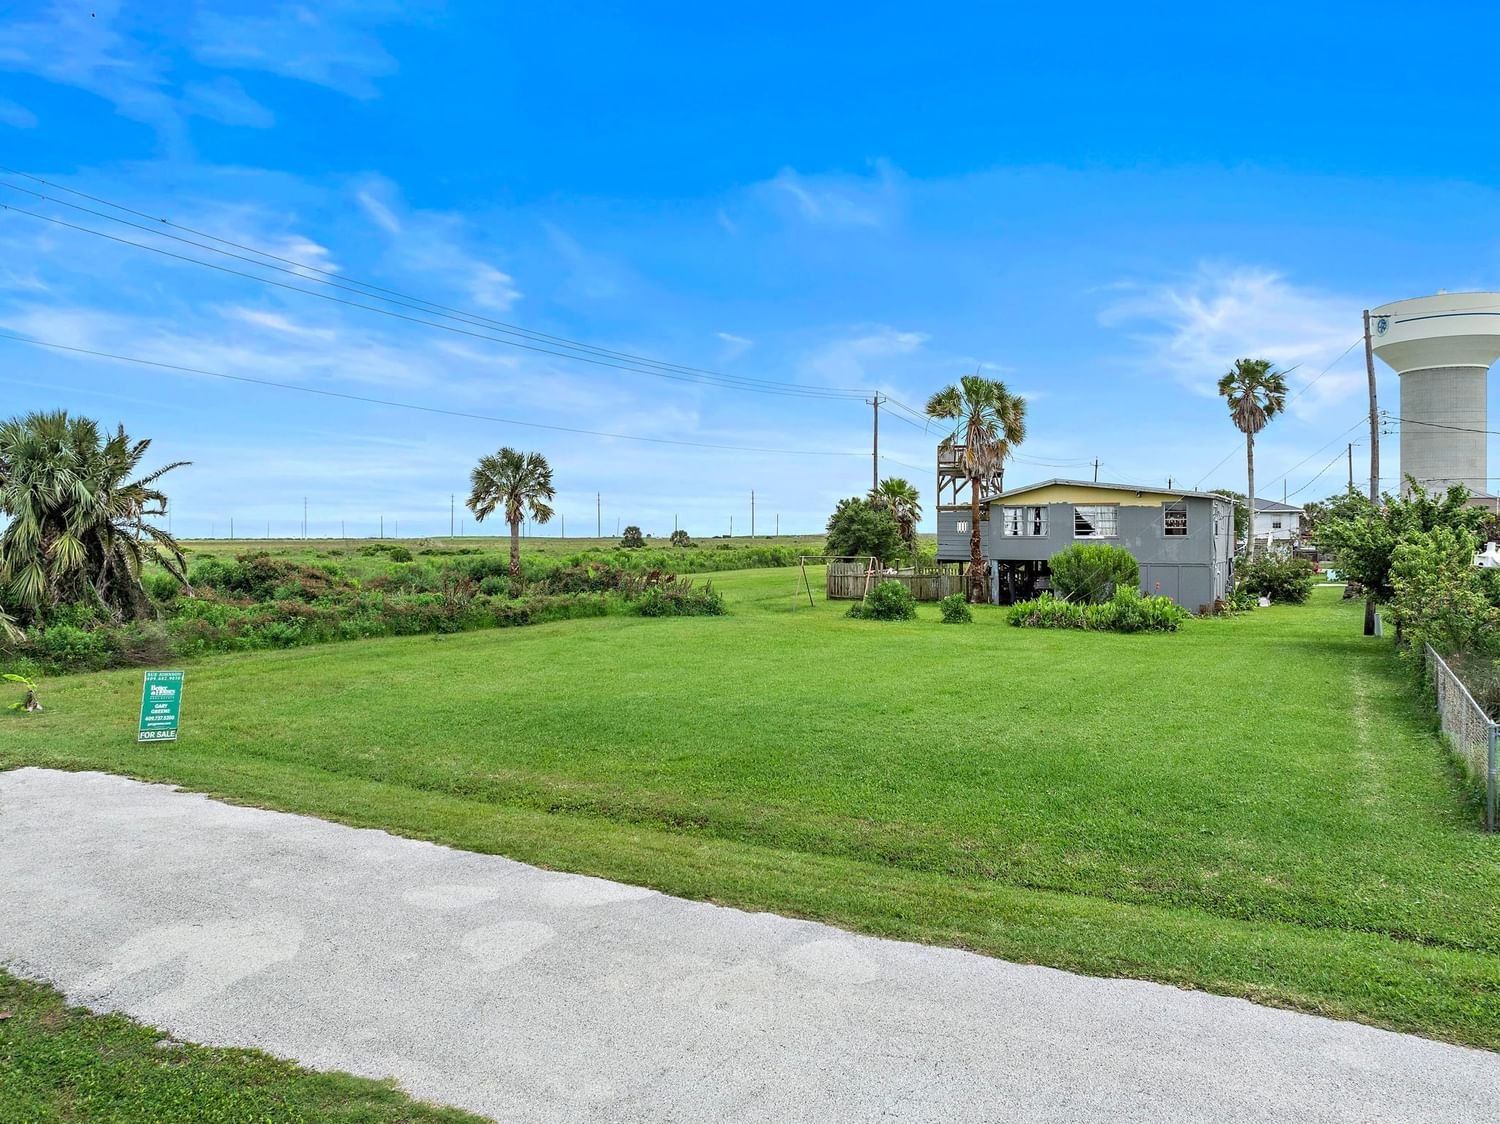 Real estate property located at 16503 Mansvelt, Galveston, Jamaica Beach 1, Jamaica Beach, TX, US